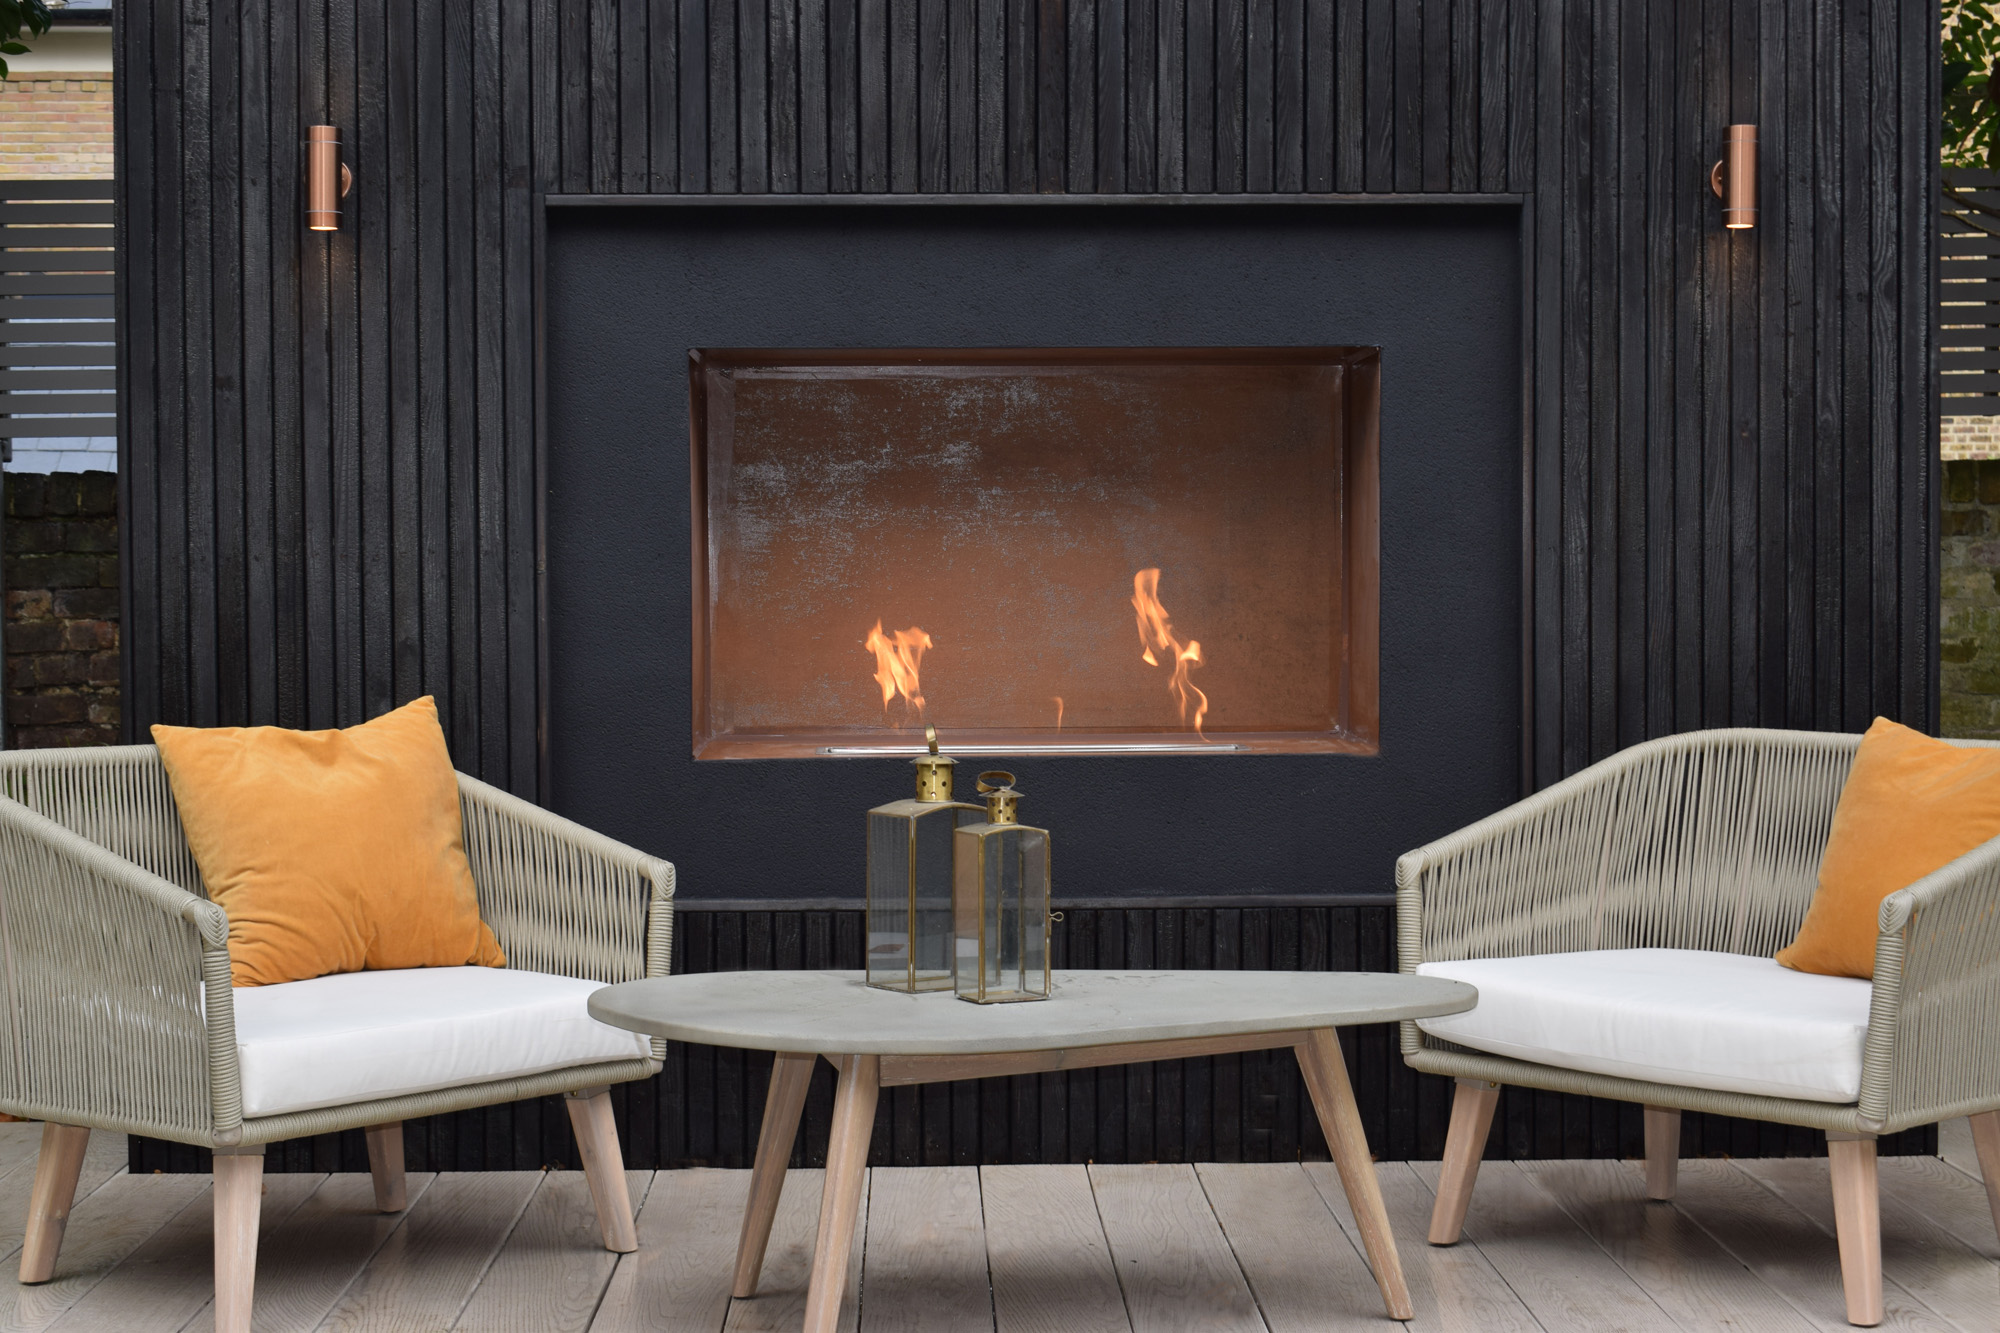 Fireplace by Pollyanna Wilkinson